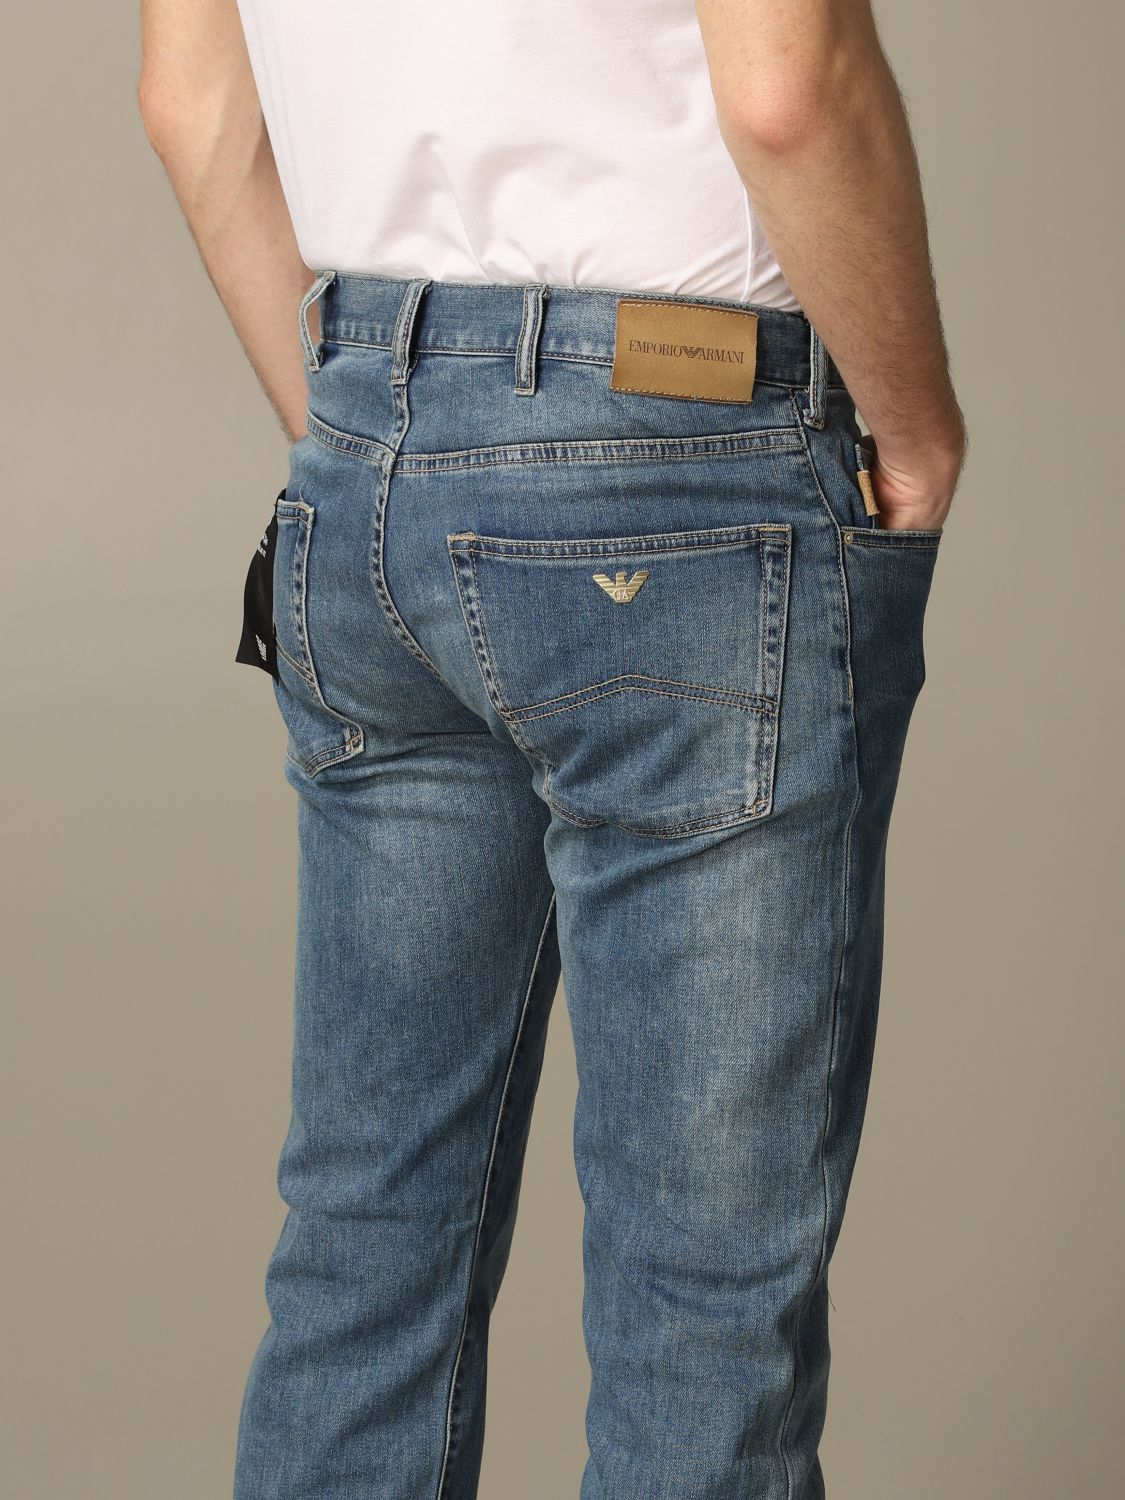 armani jeans for sale